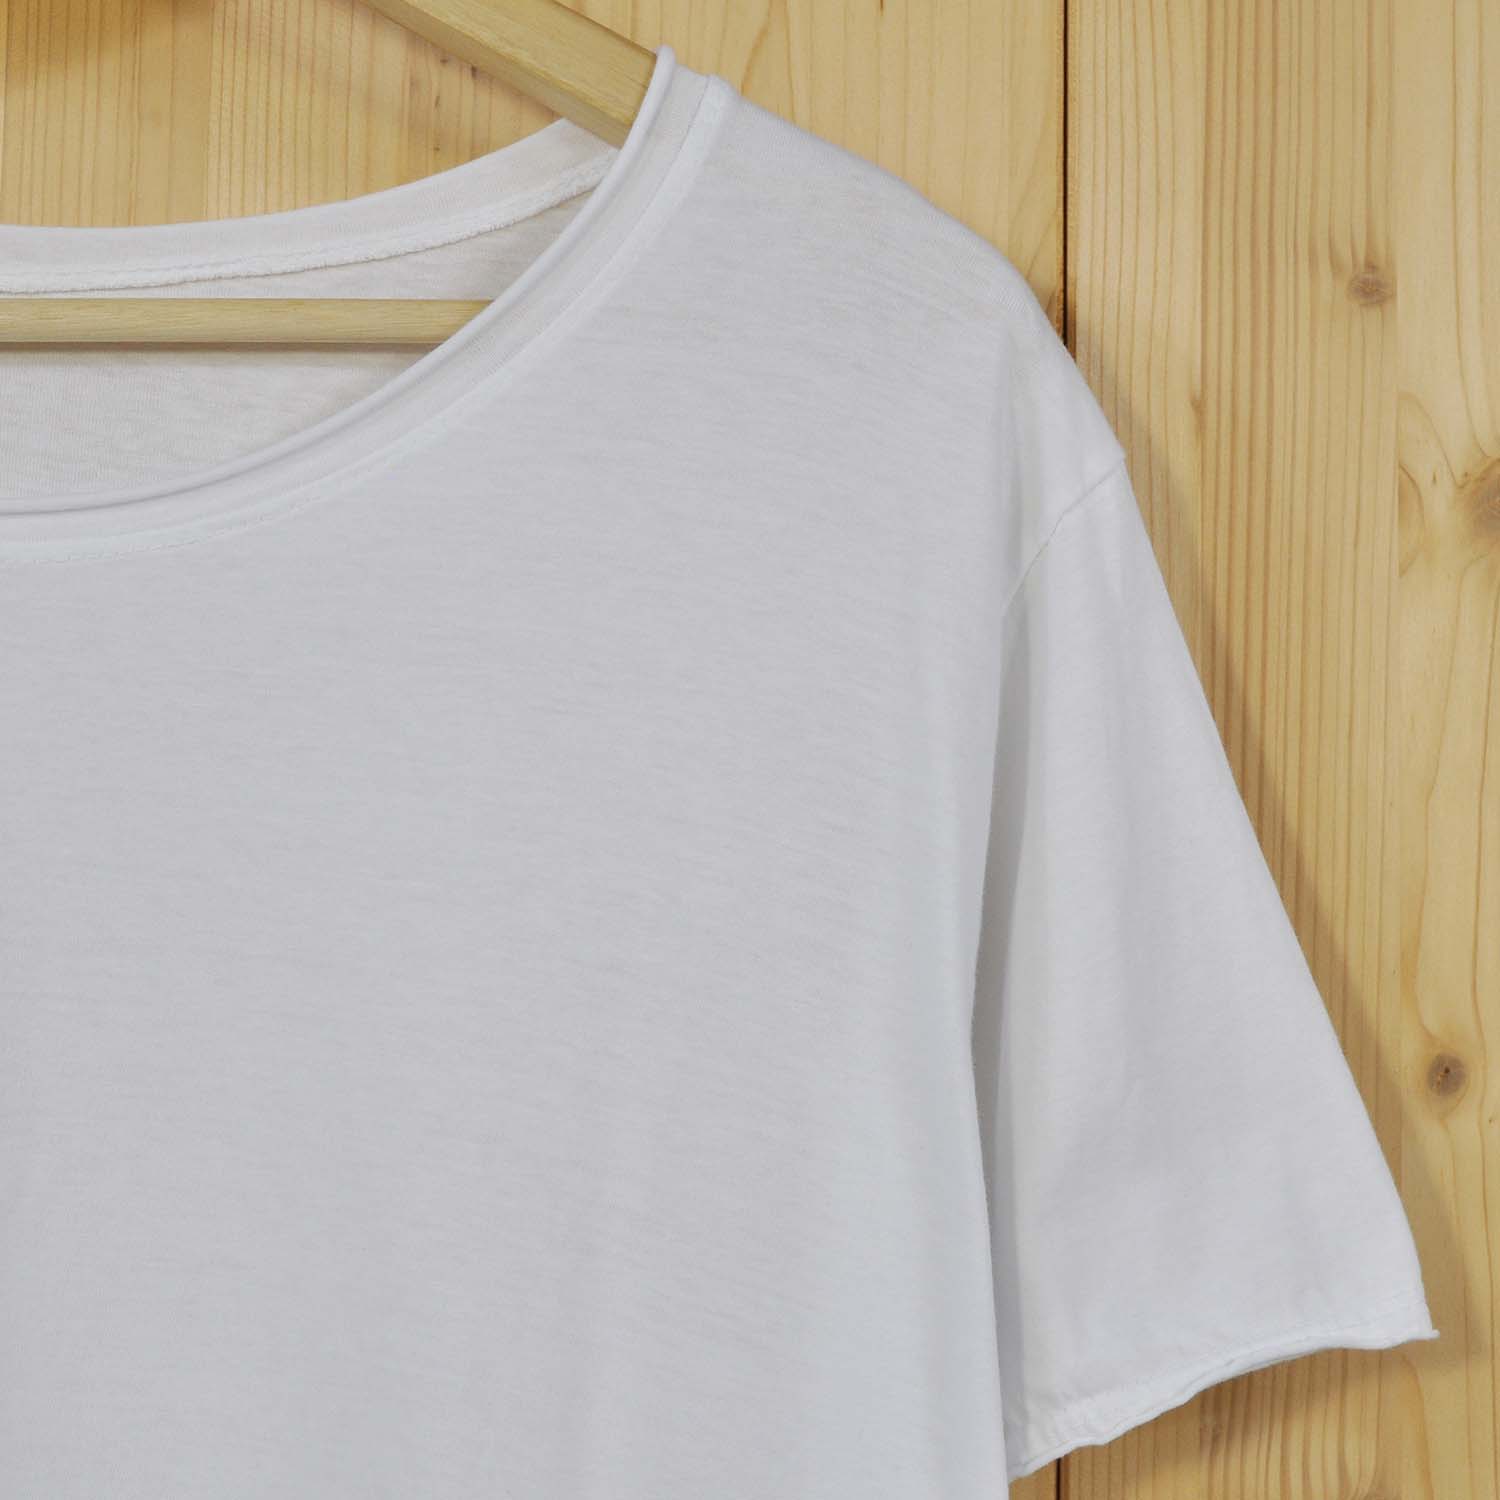 Camiseta asimétrica manga corta blanca